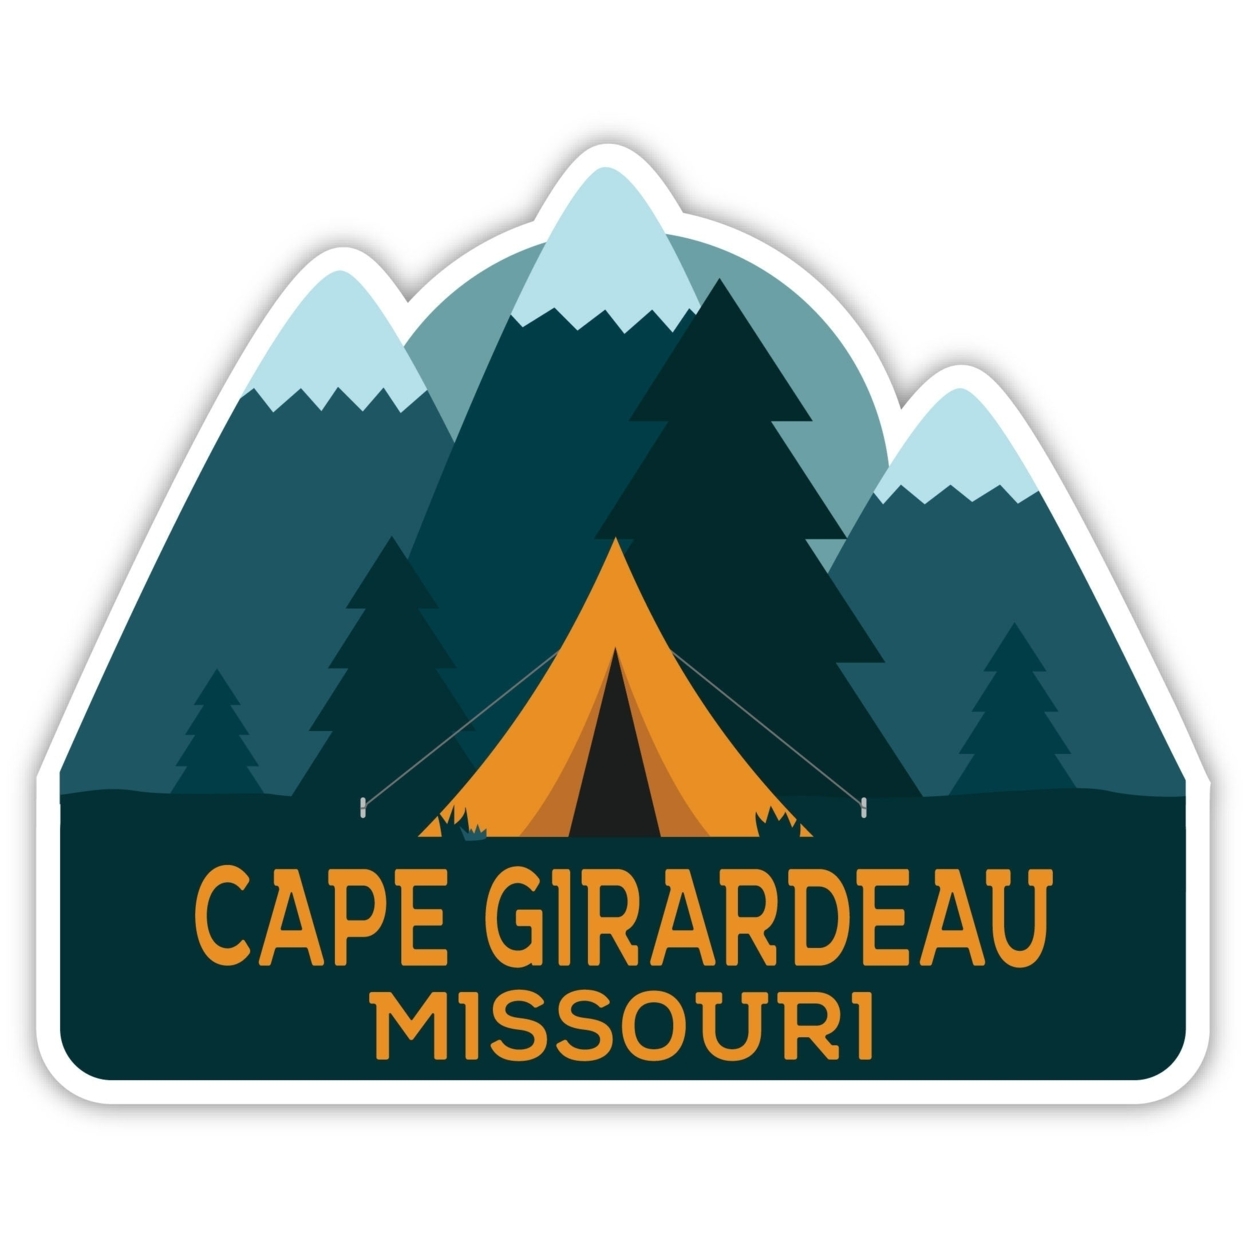 Cape Girardeau Missouri Souvenir Decorative Stickers (Choose Theme And Size) - Single Unit, 6-Inch, Tent